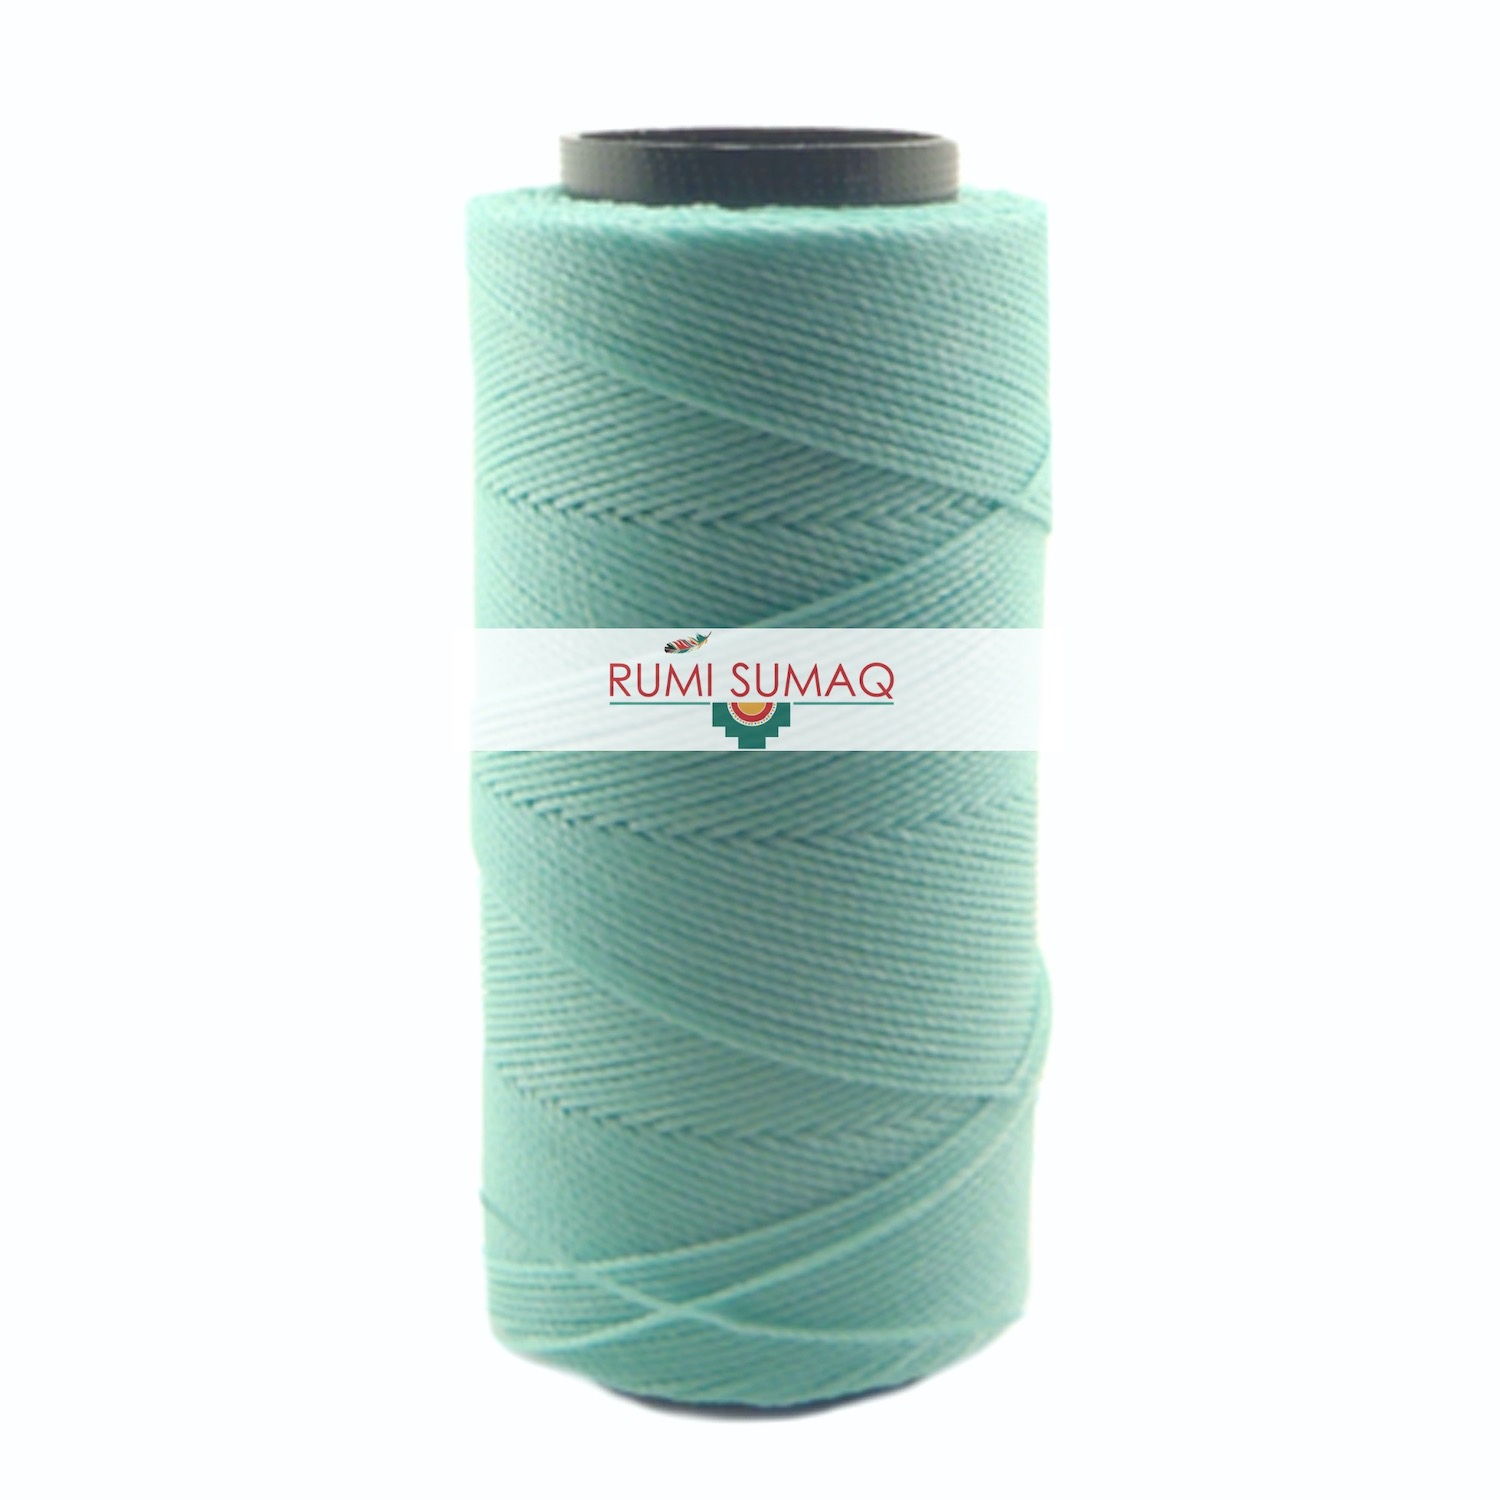 Settanyl 05-777 Mint Green Waxed Polyester Cord Creme de Menthe Setta Encerada